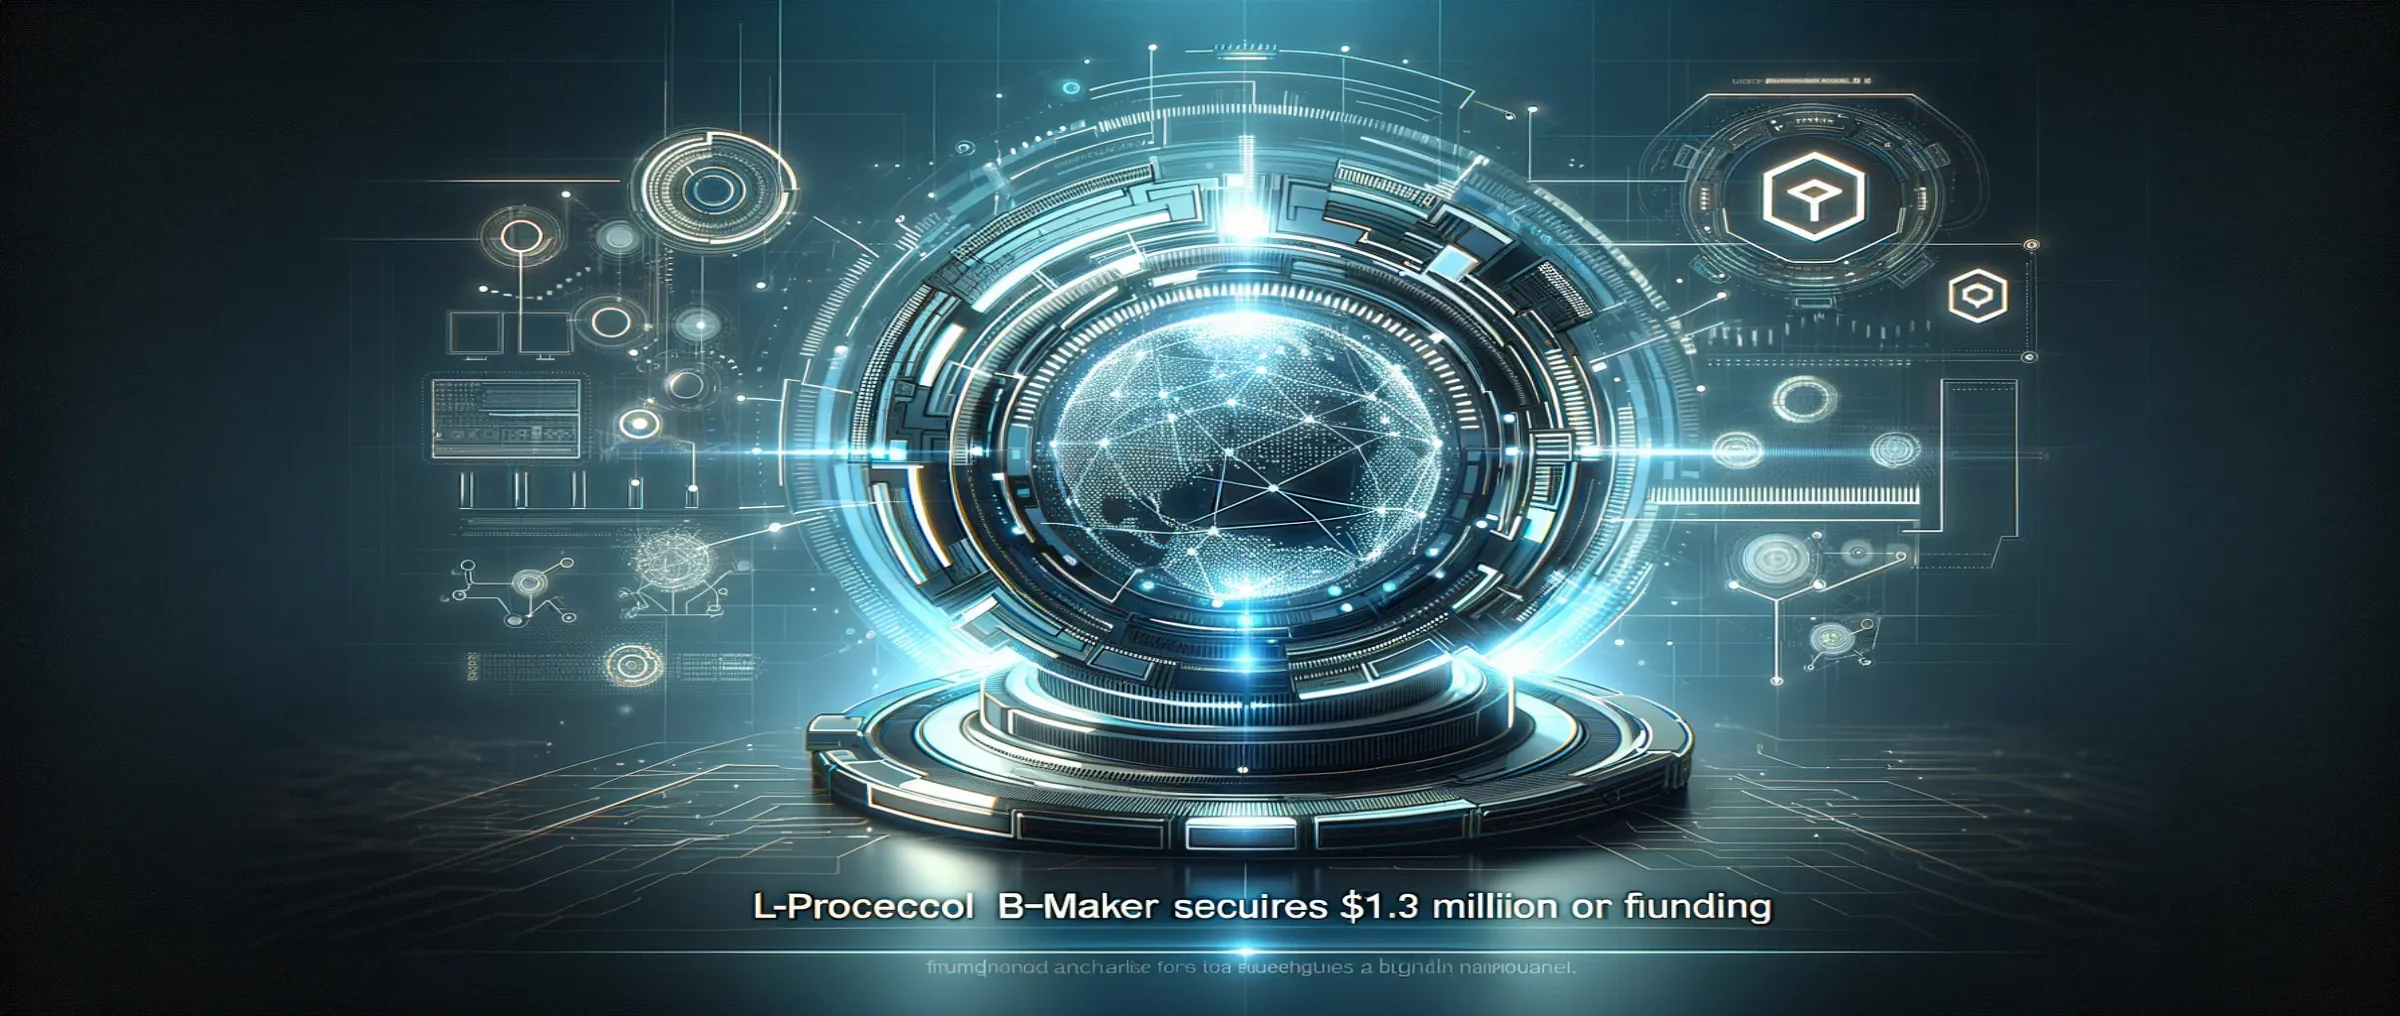 L2-протокол Bmaker привлек $1,2 миллиона инвестиций